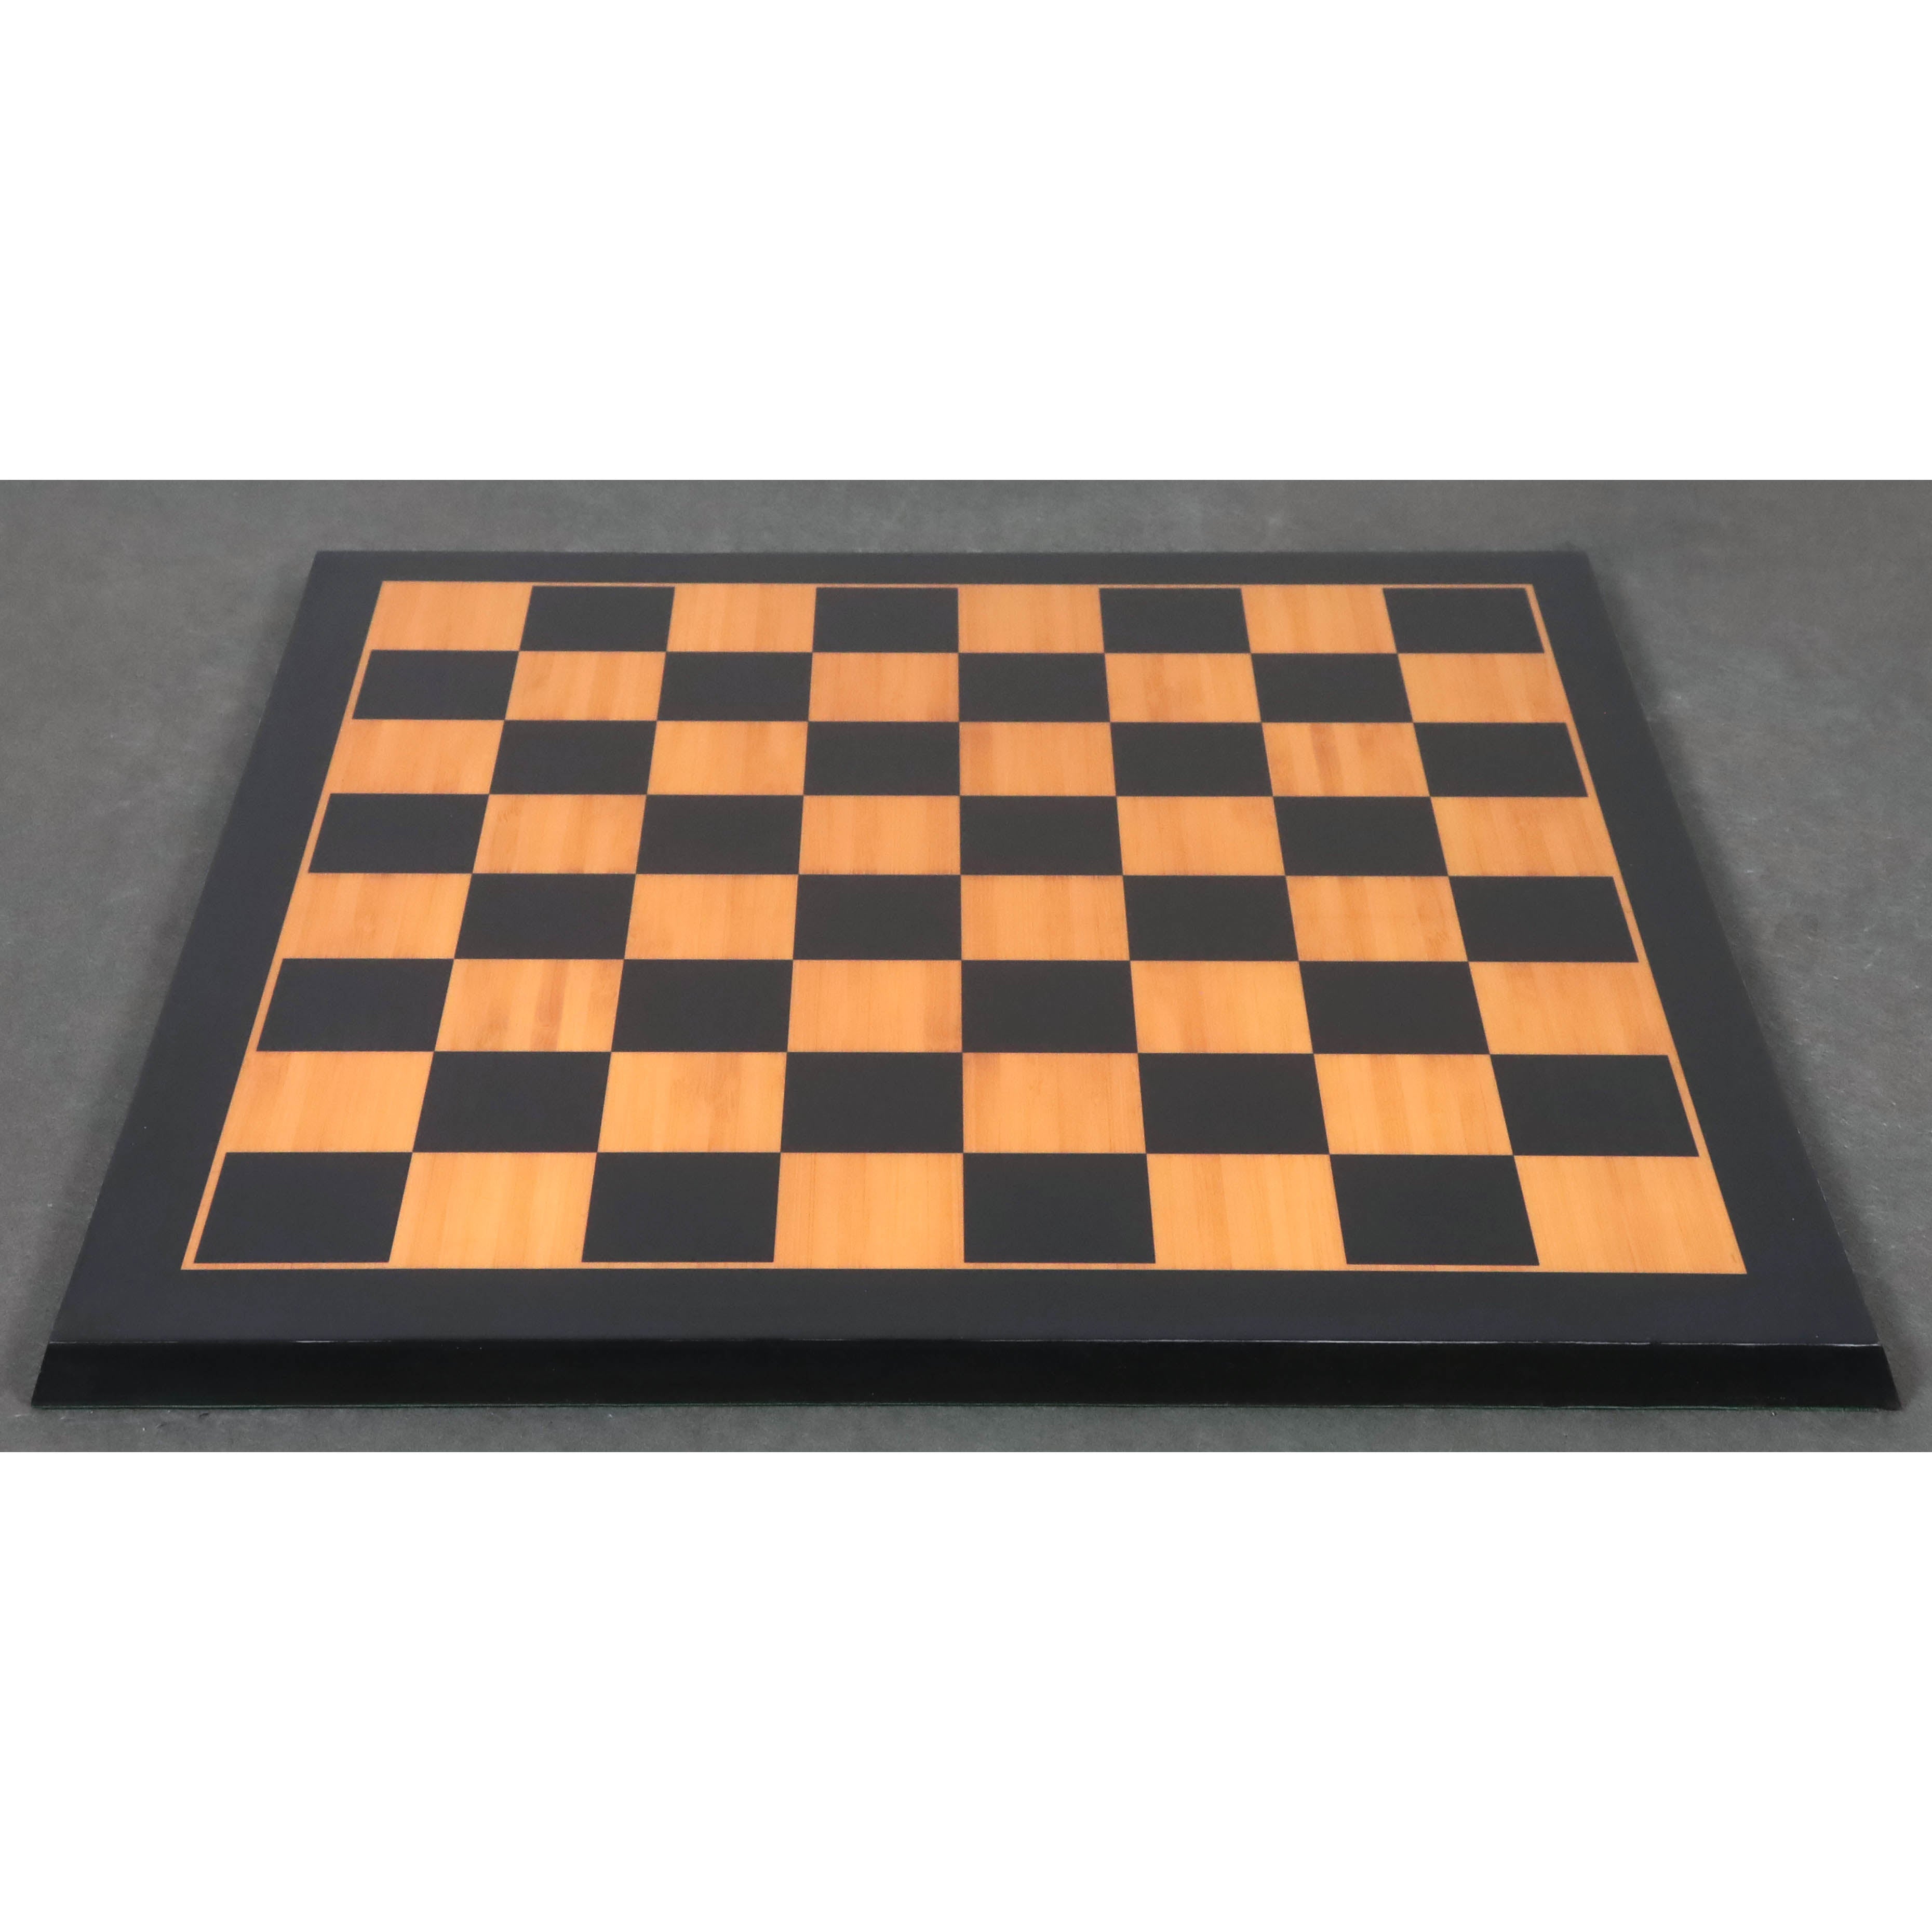 Buy Printed Chess Boards | Royal Chess Mall